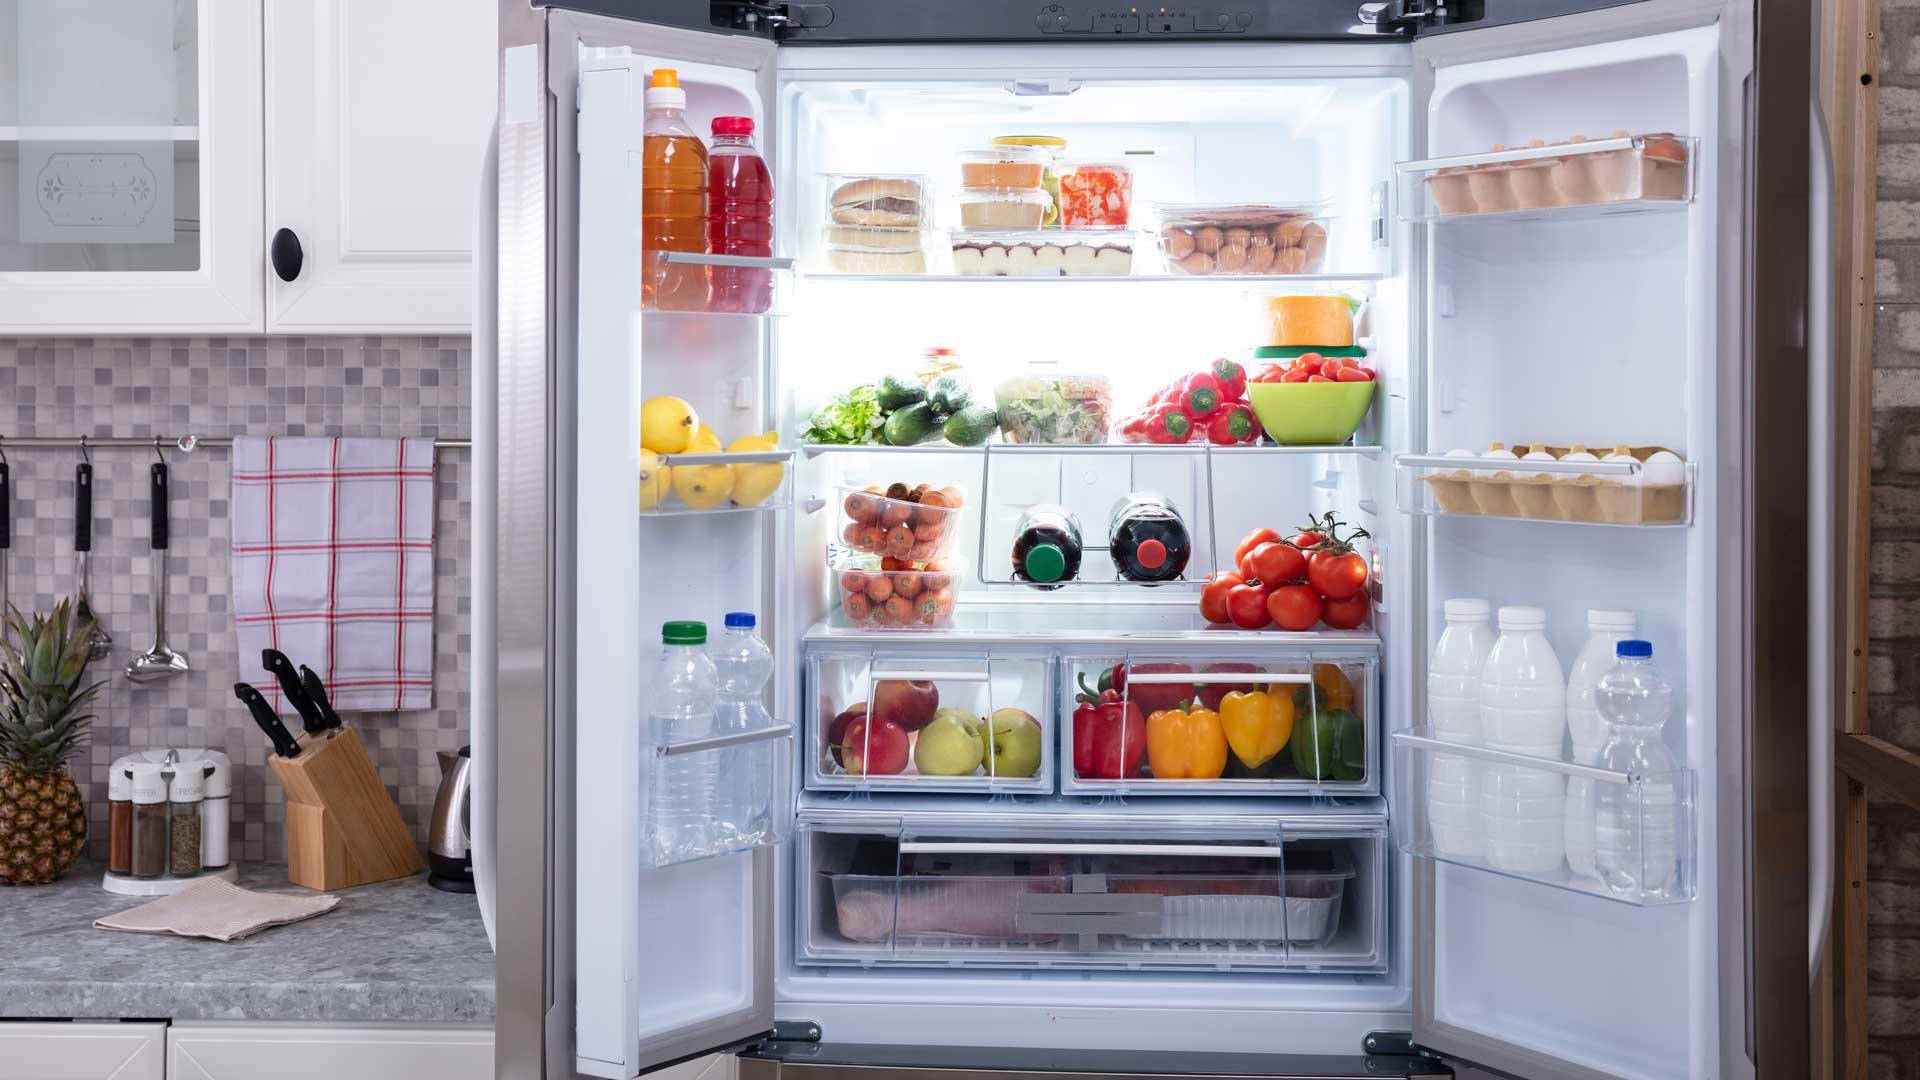 An open, well-stocked refrigerator